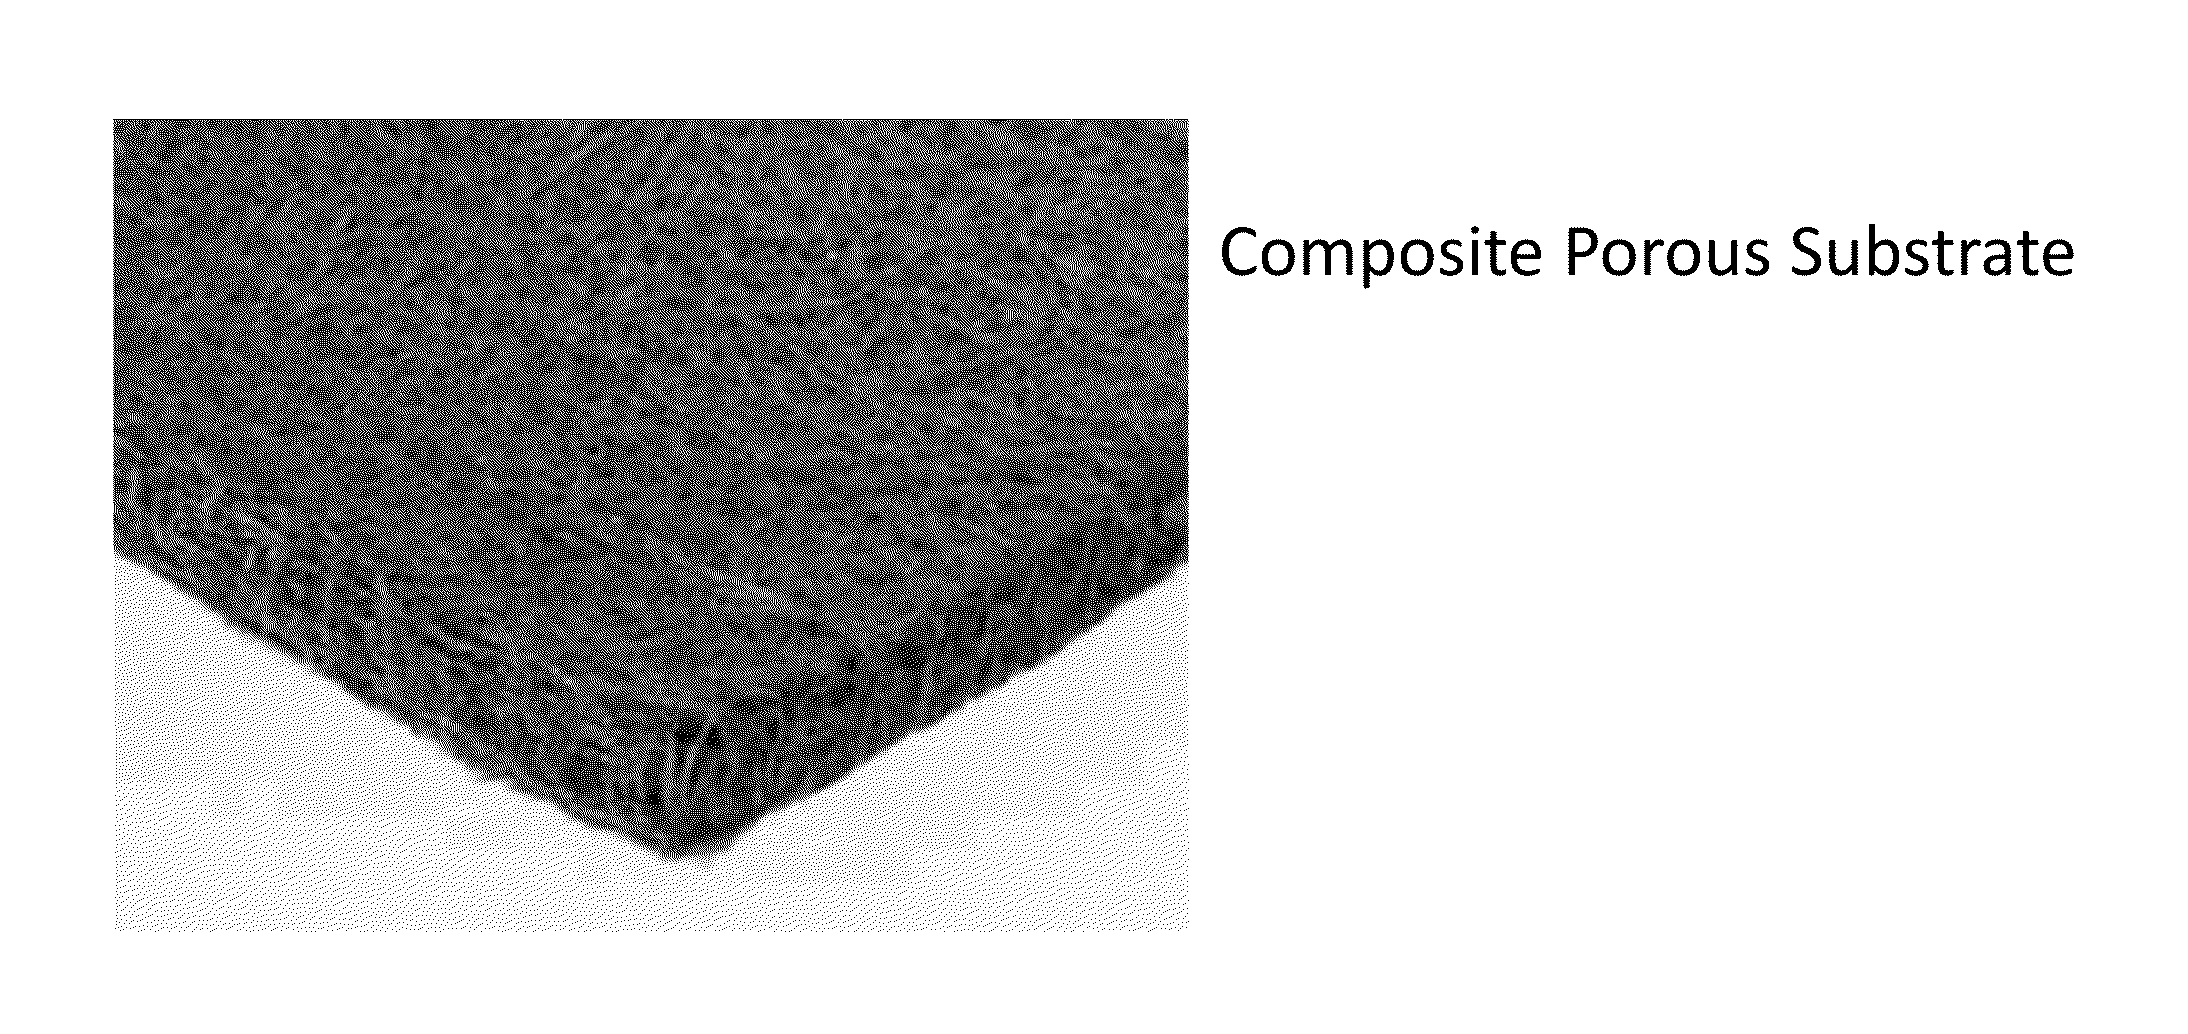 Composite Porous Fibrous Dehumidifying Material